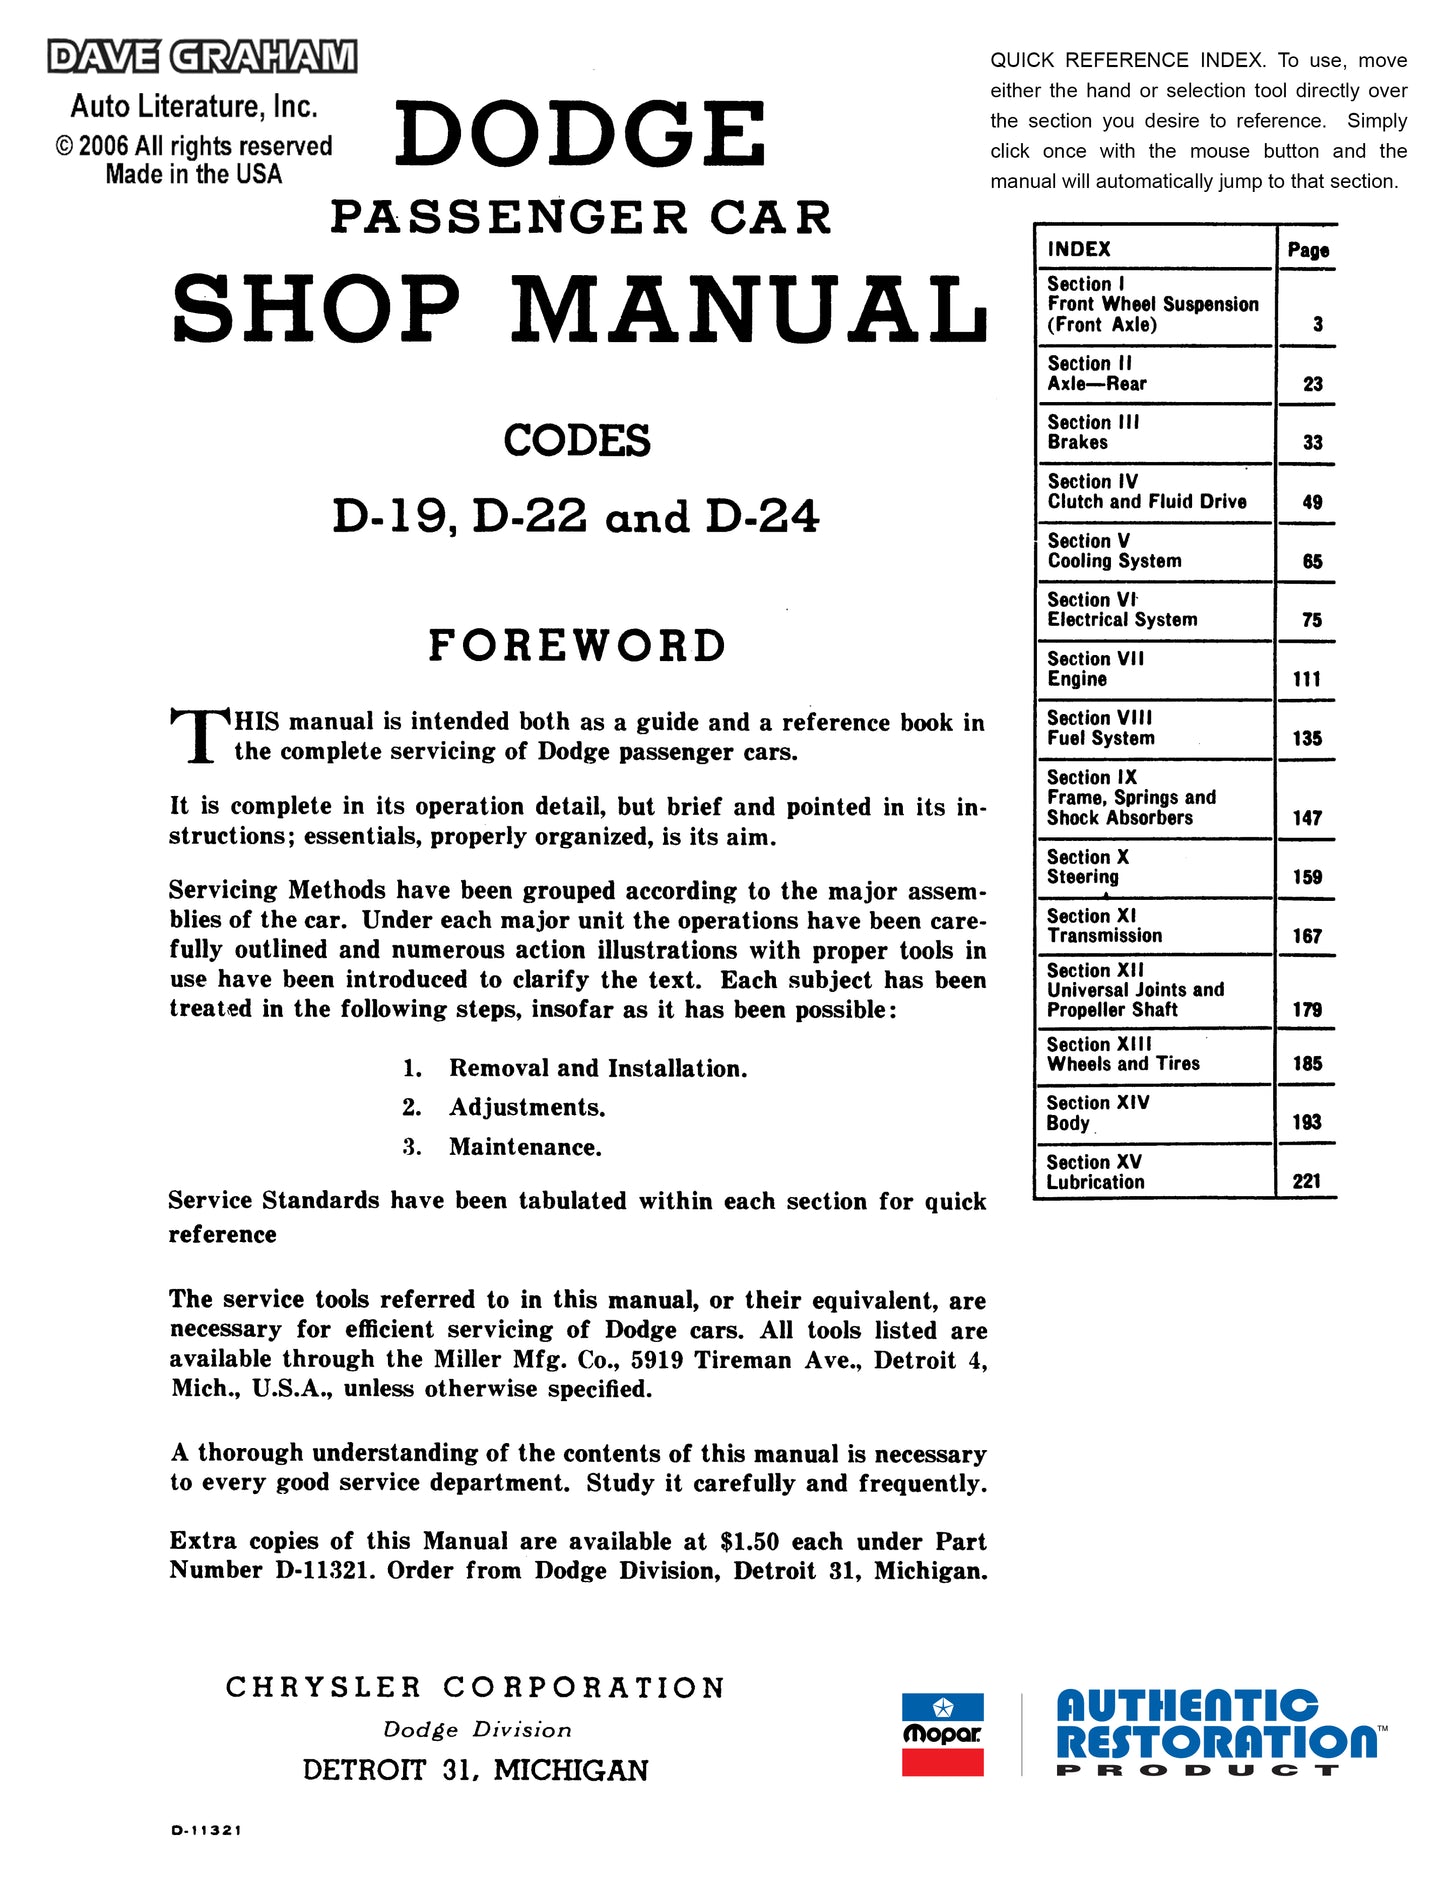 1941-1948 Dodge Service Manual - All Models